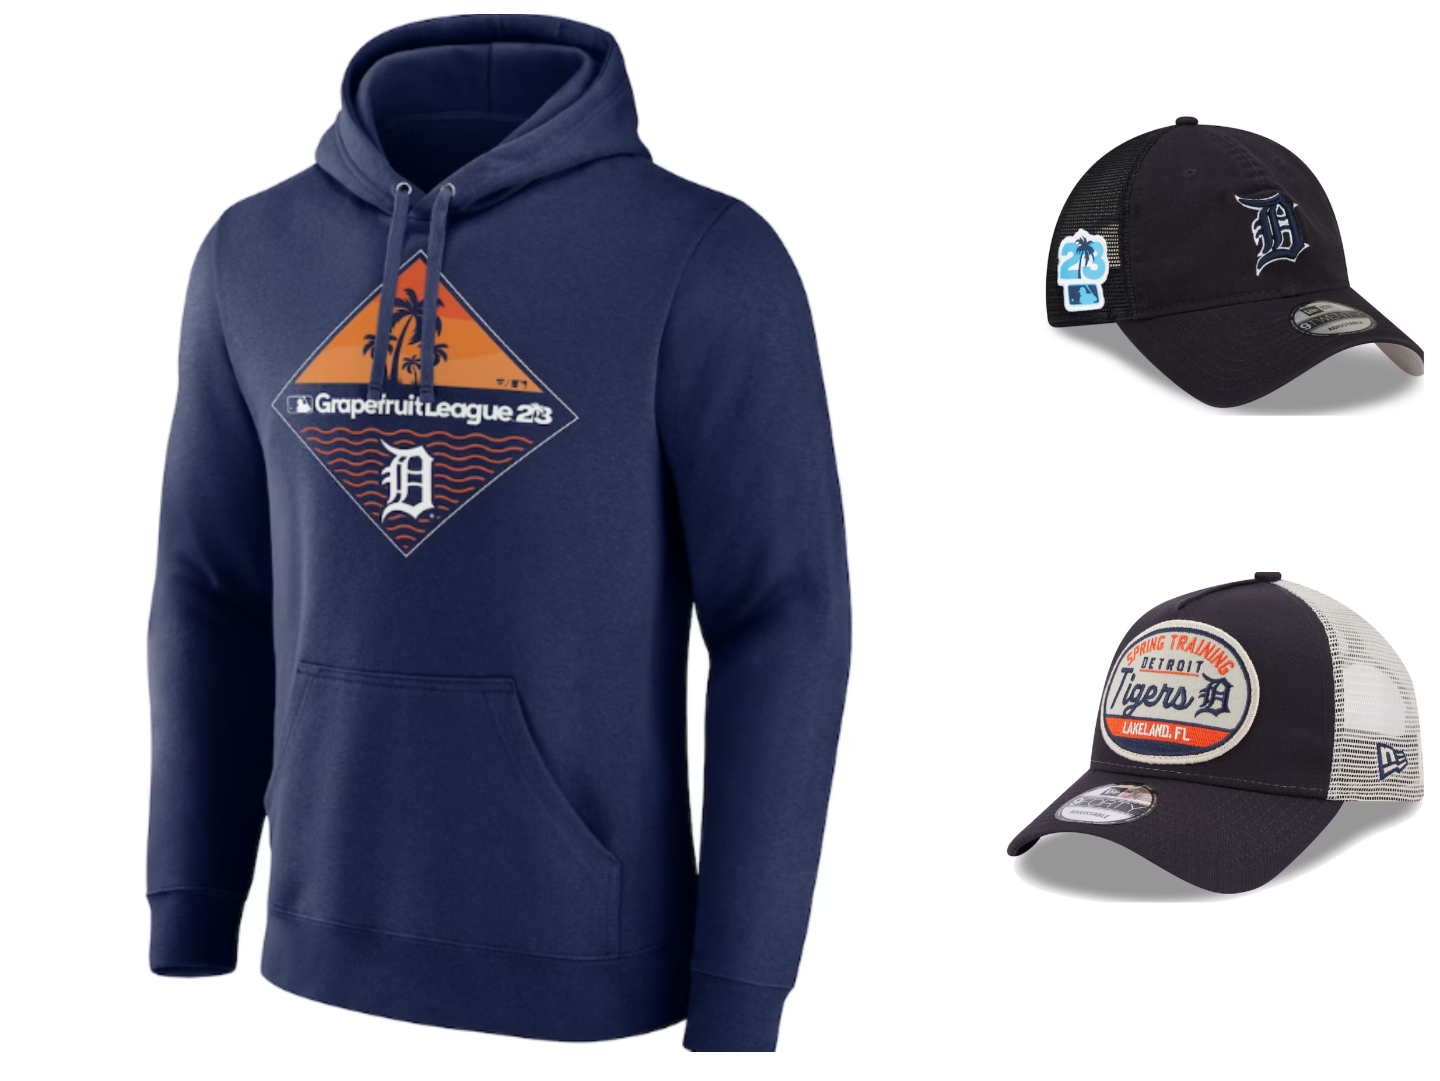 Fanatics has fresh deals for new Detroit Tigers sportswear to kick